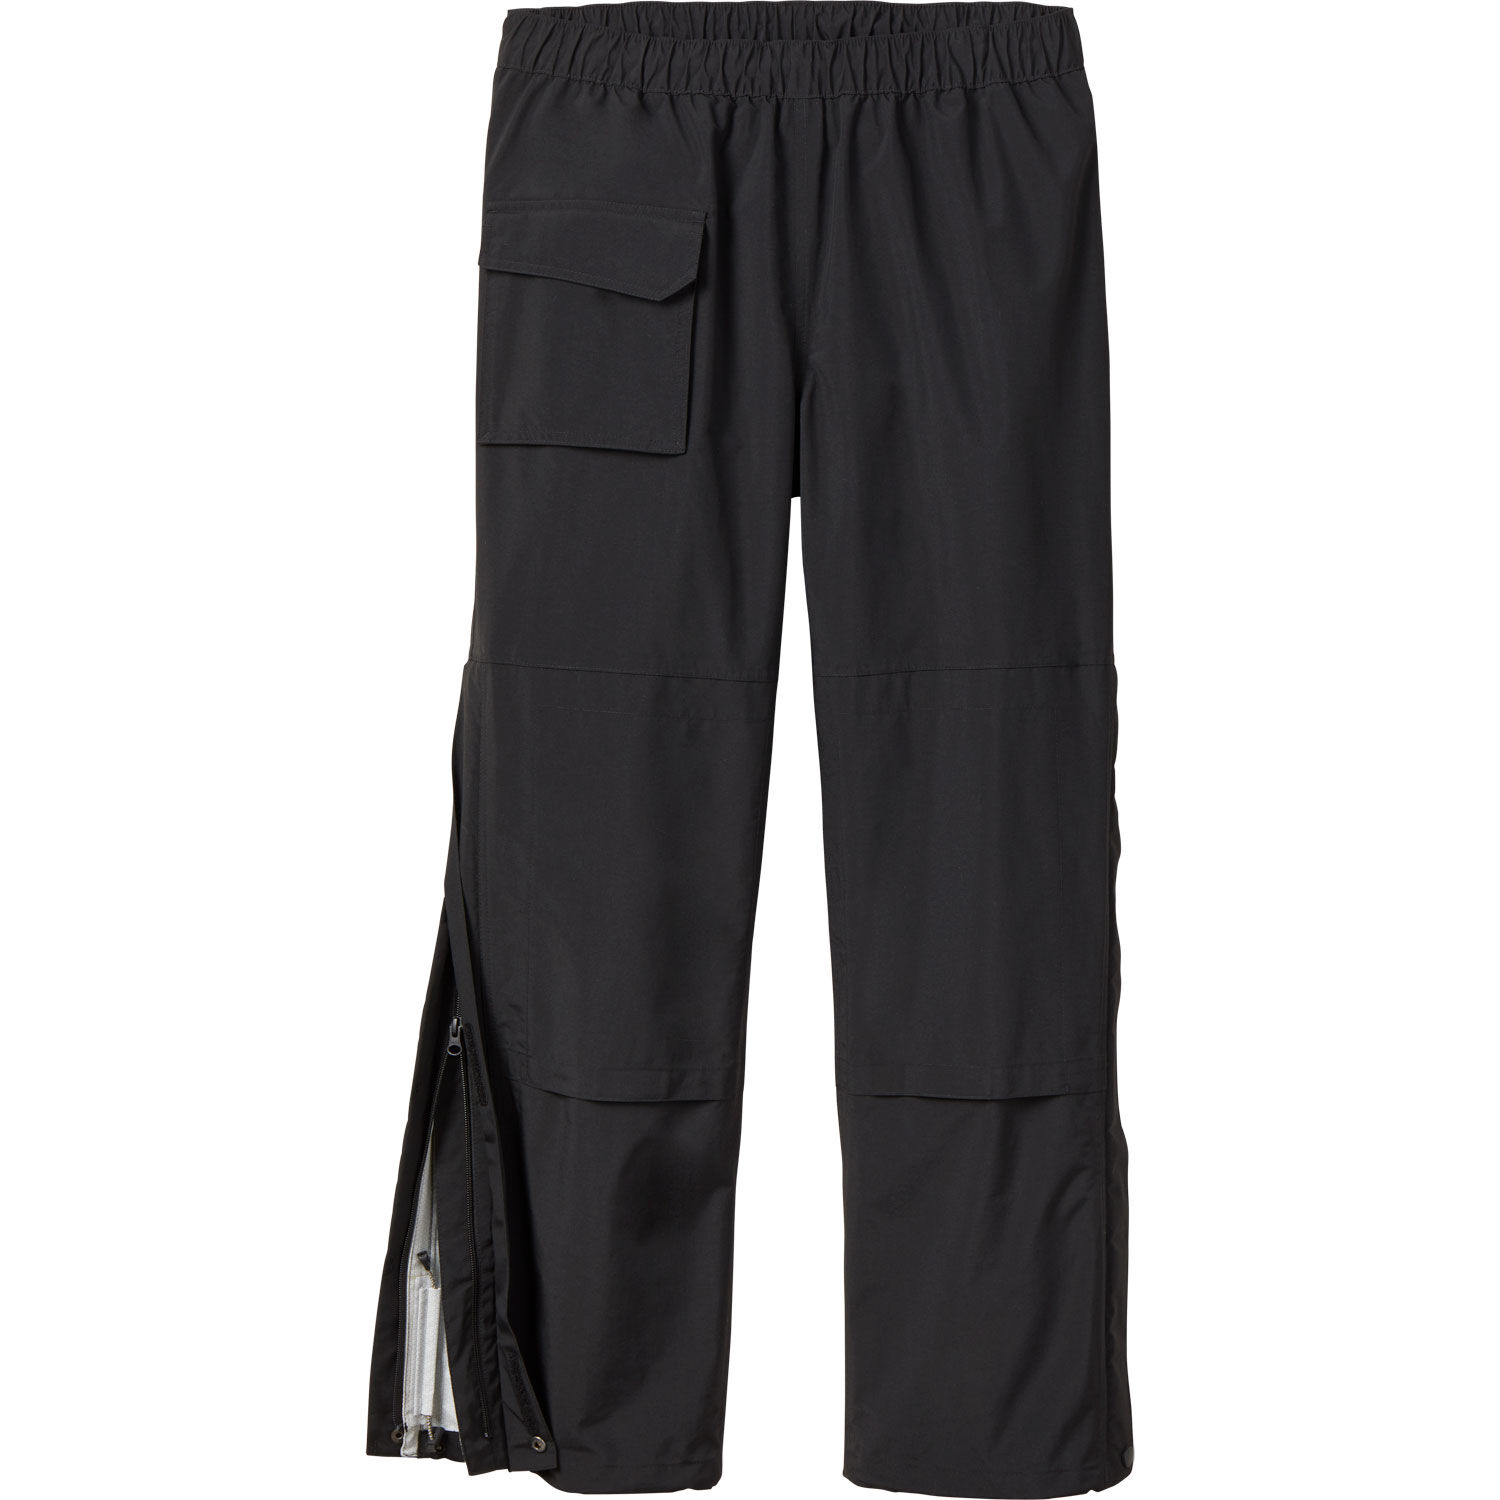 Mountain Hardwear Exposure/2 GORE-TEX PACLITE Plus Pants - Men's | REI Co-op